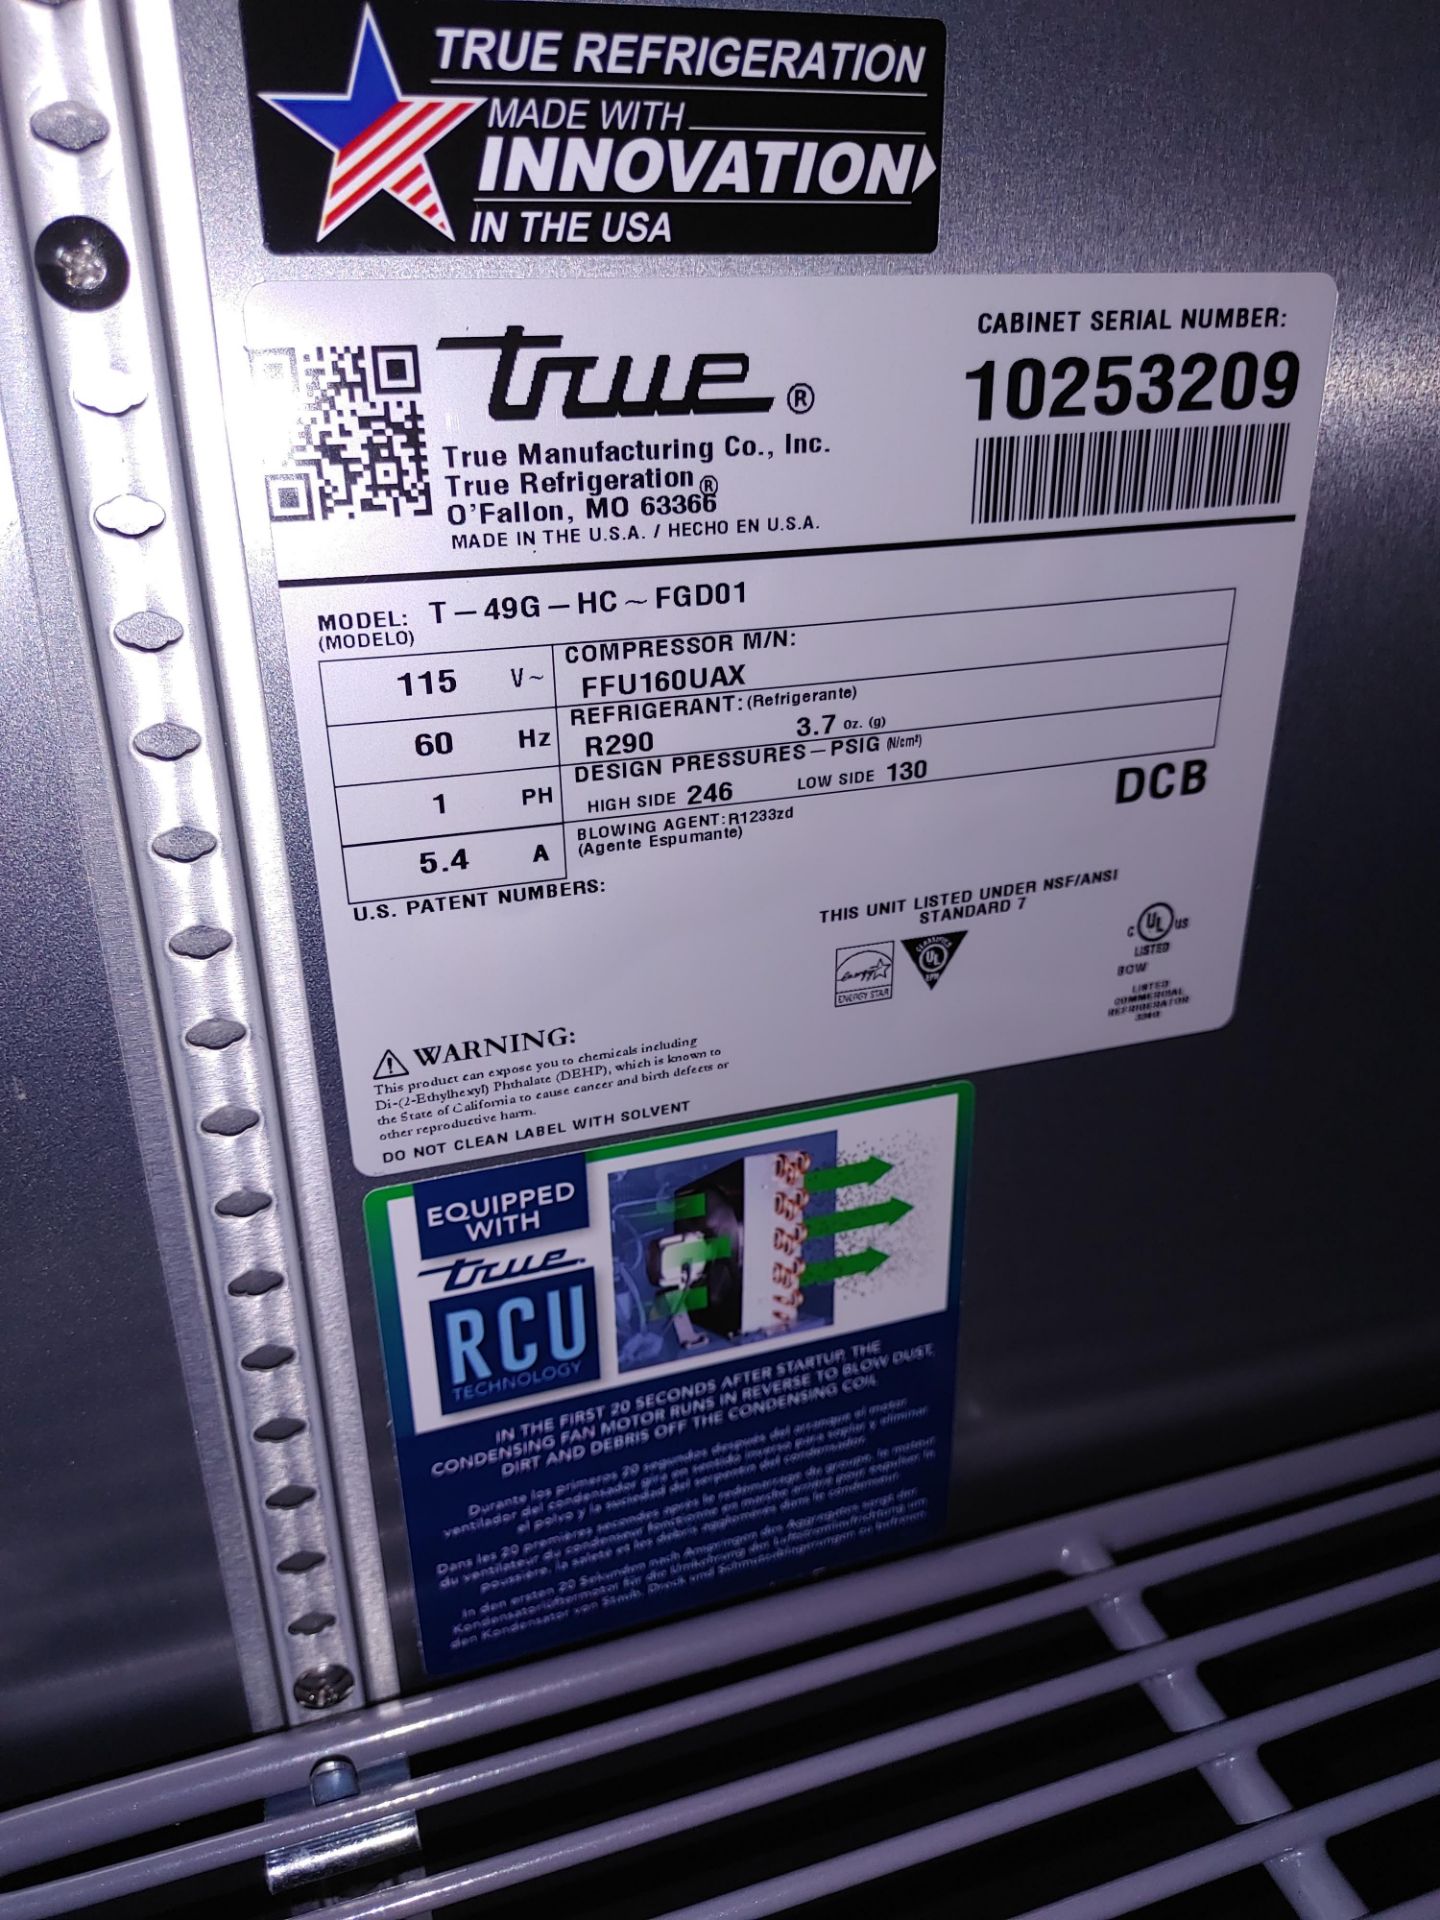 True "T-49G-HC-FGD01" 2 Door Glass Front Refrigerator S/N 10253209 - Image 2 of 2